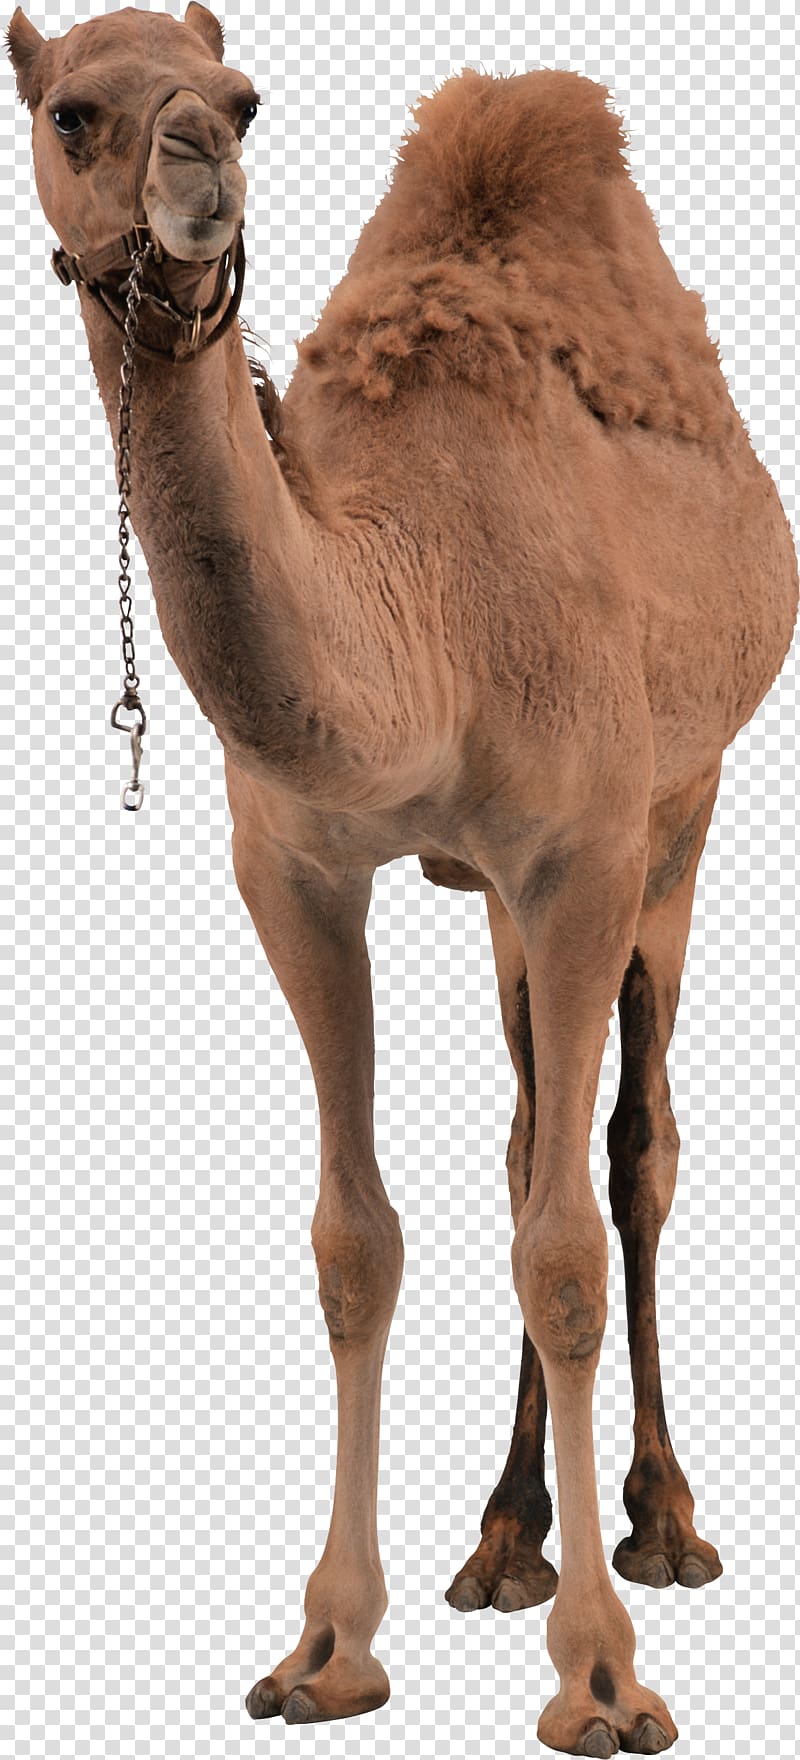 Dromedary Bactrian camel, Camel transparent background PNG clipart